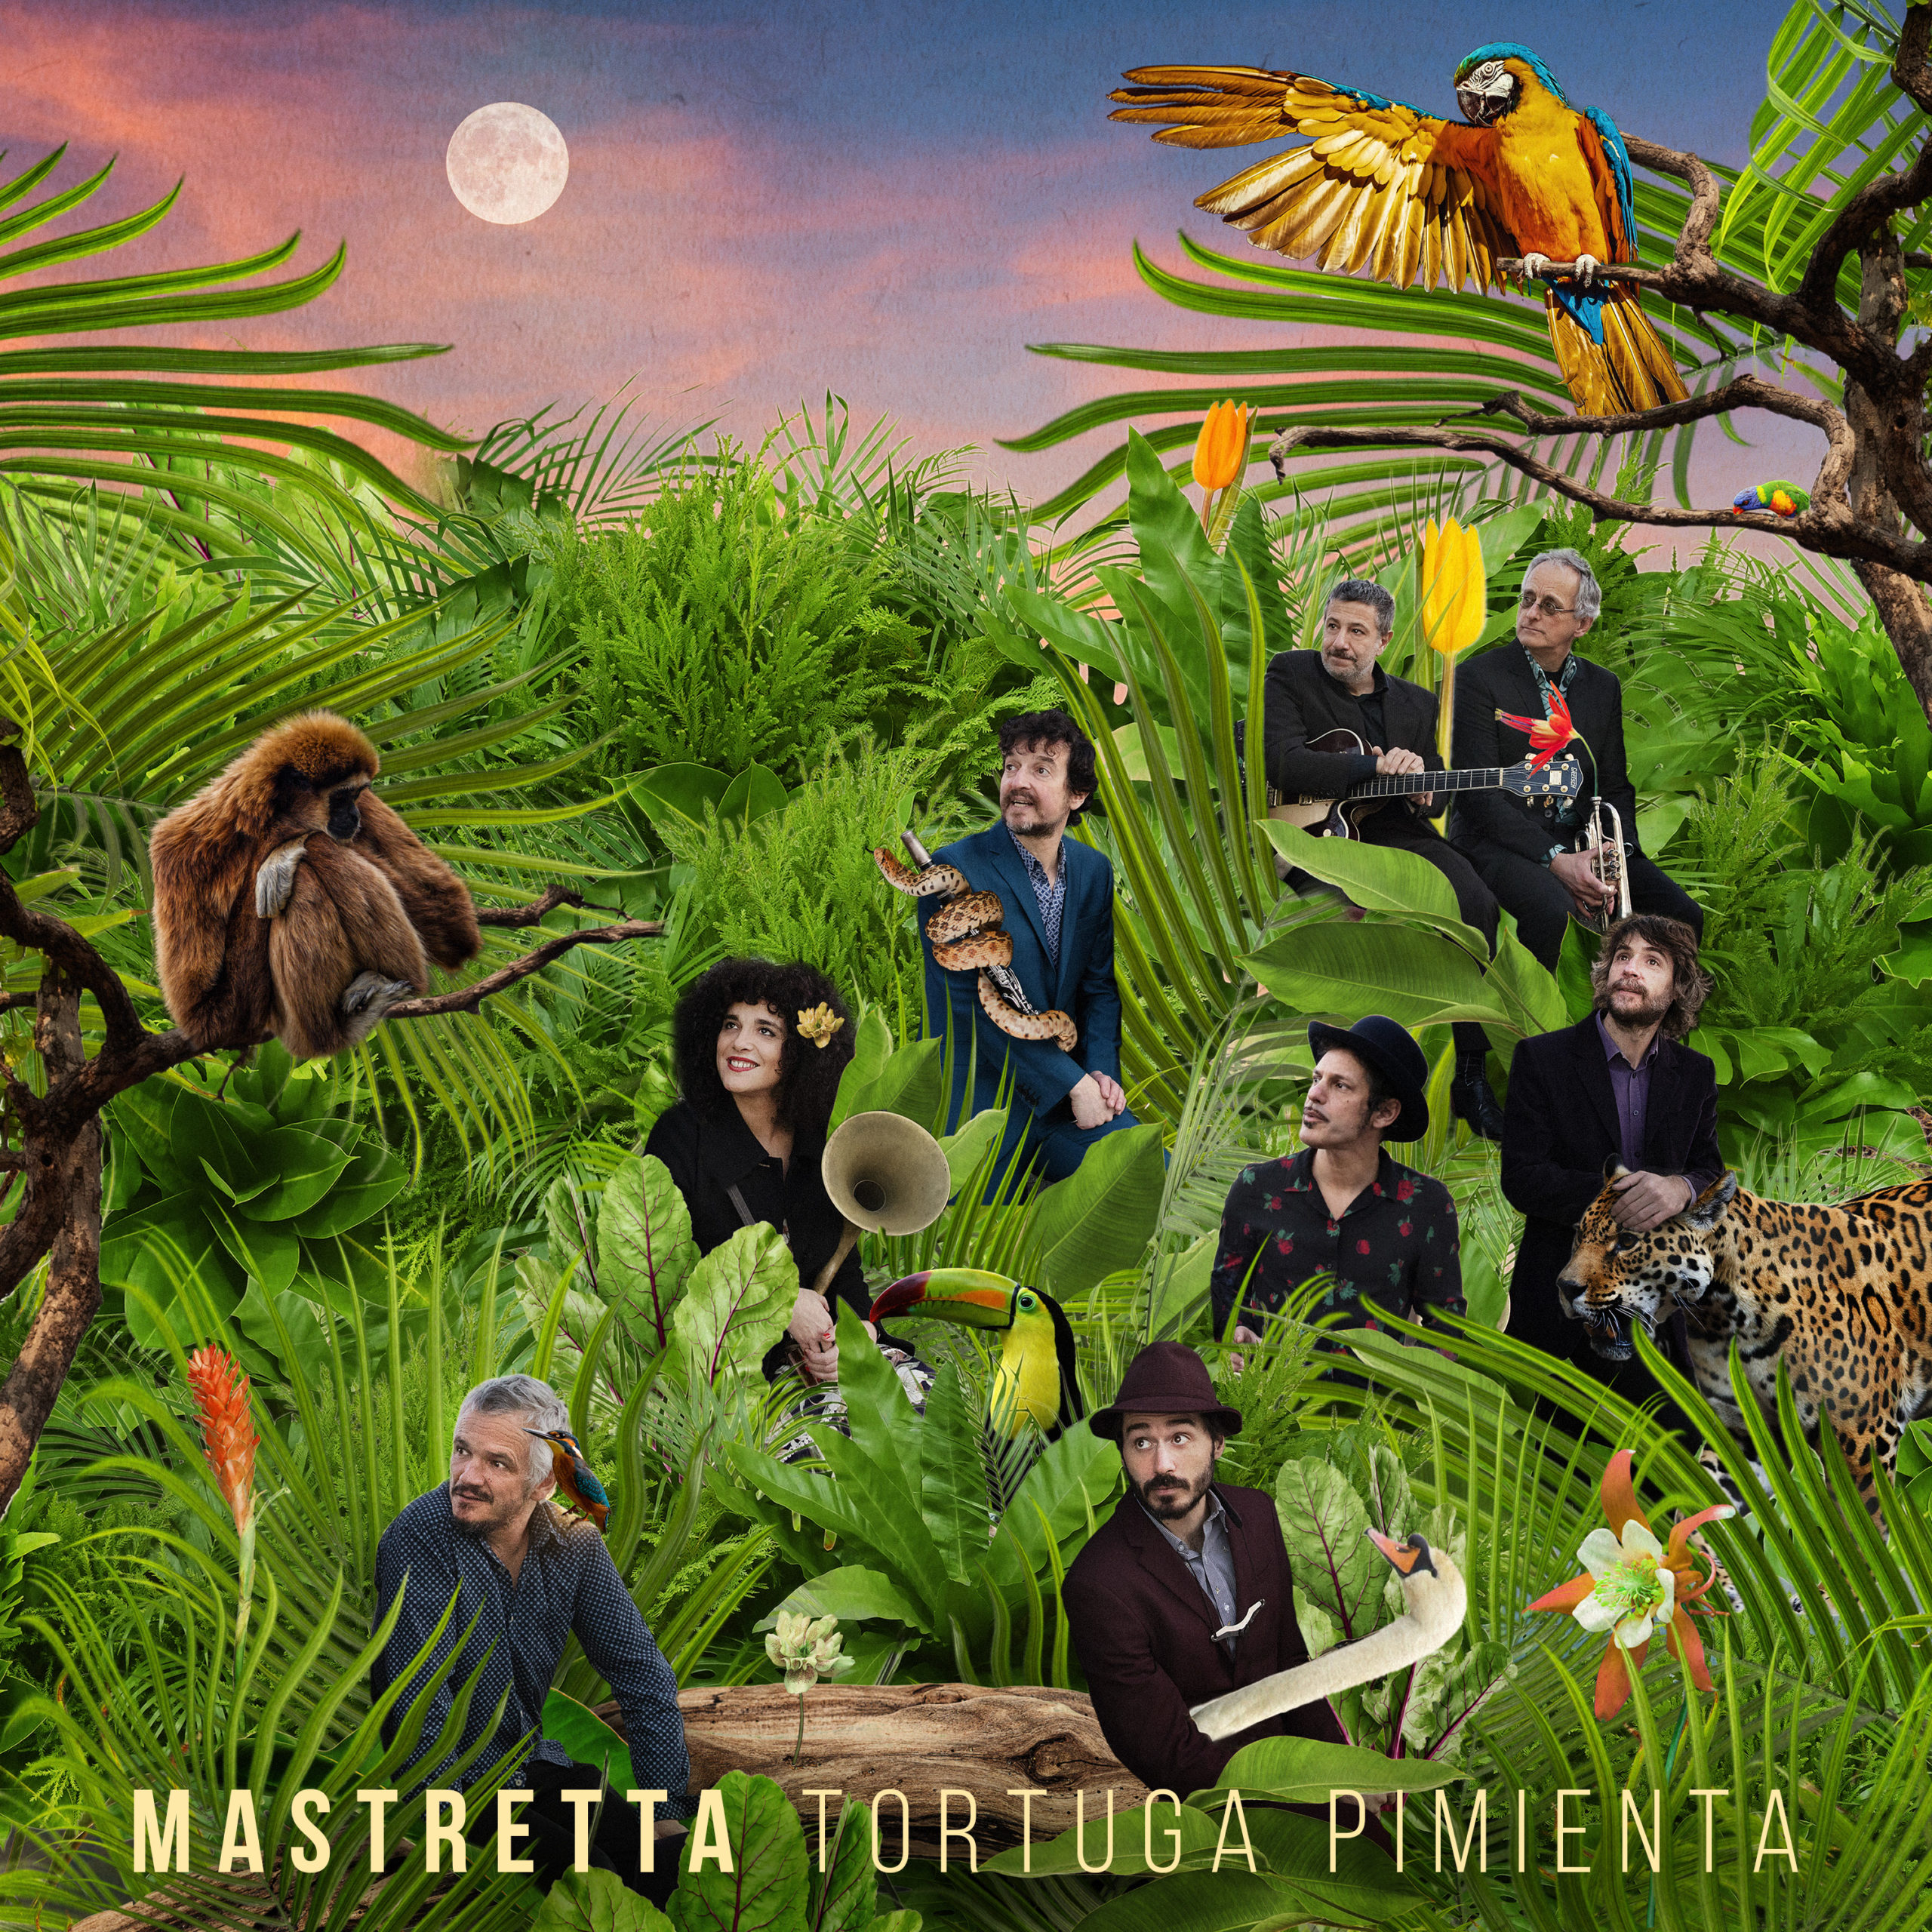 Nuevo single Mastretta | Tortuga Pimienta - Portada 2022©